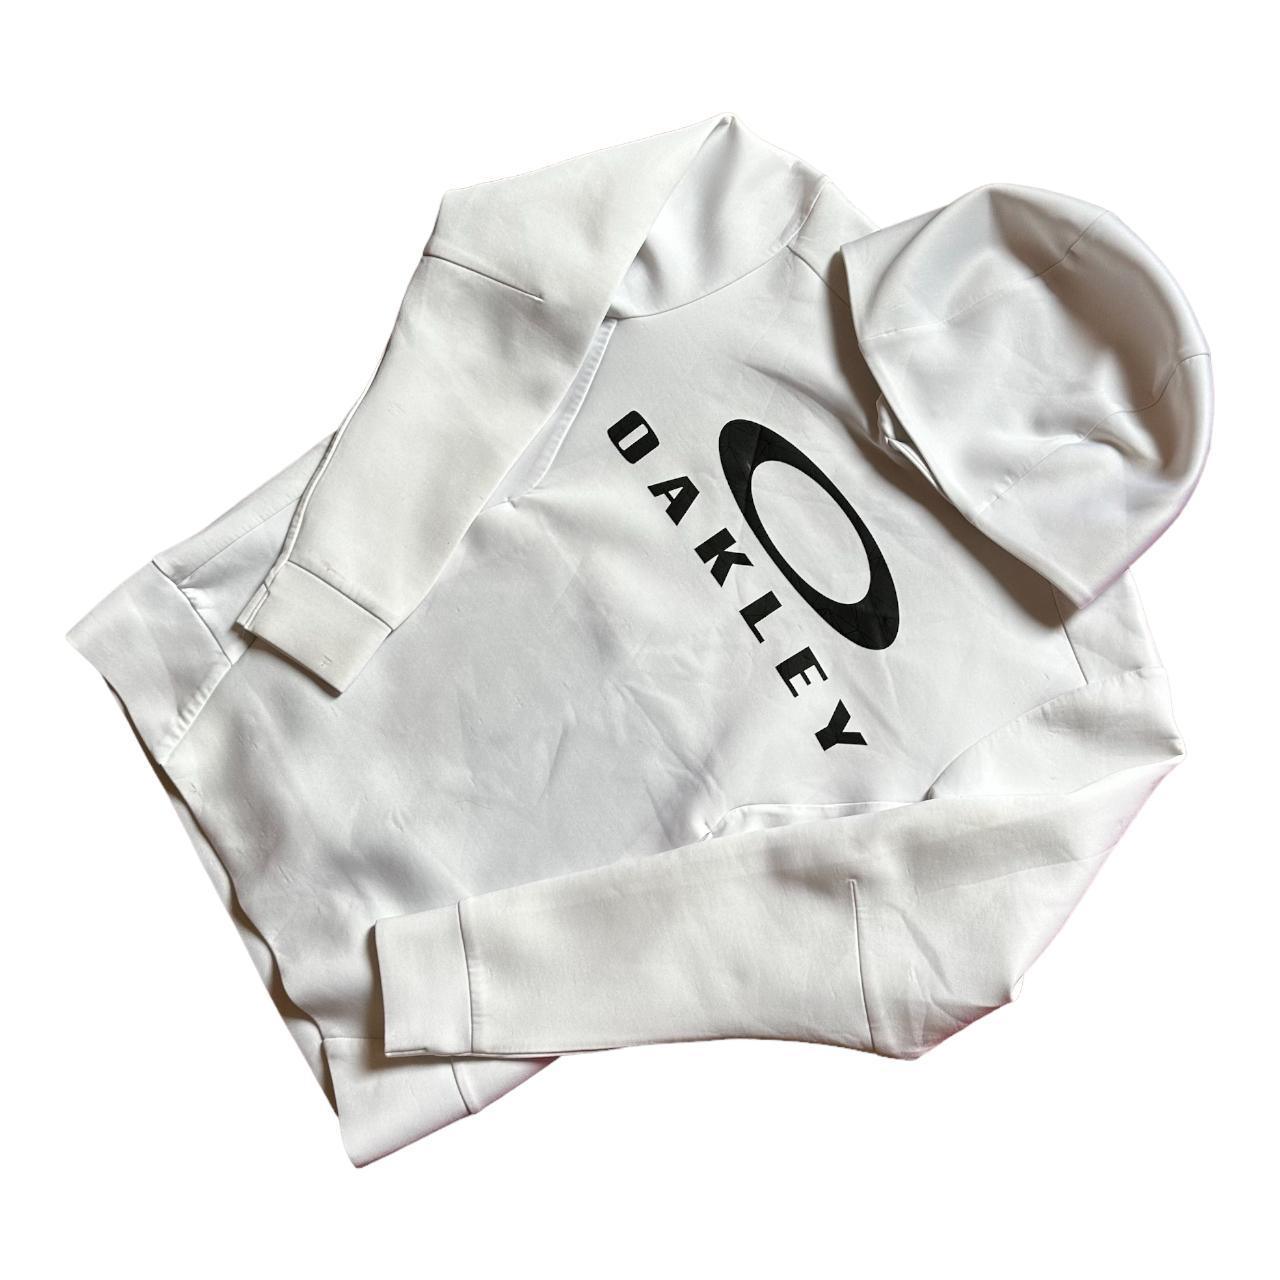 Oakley logo white Long sleeve hoodie - Known Source